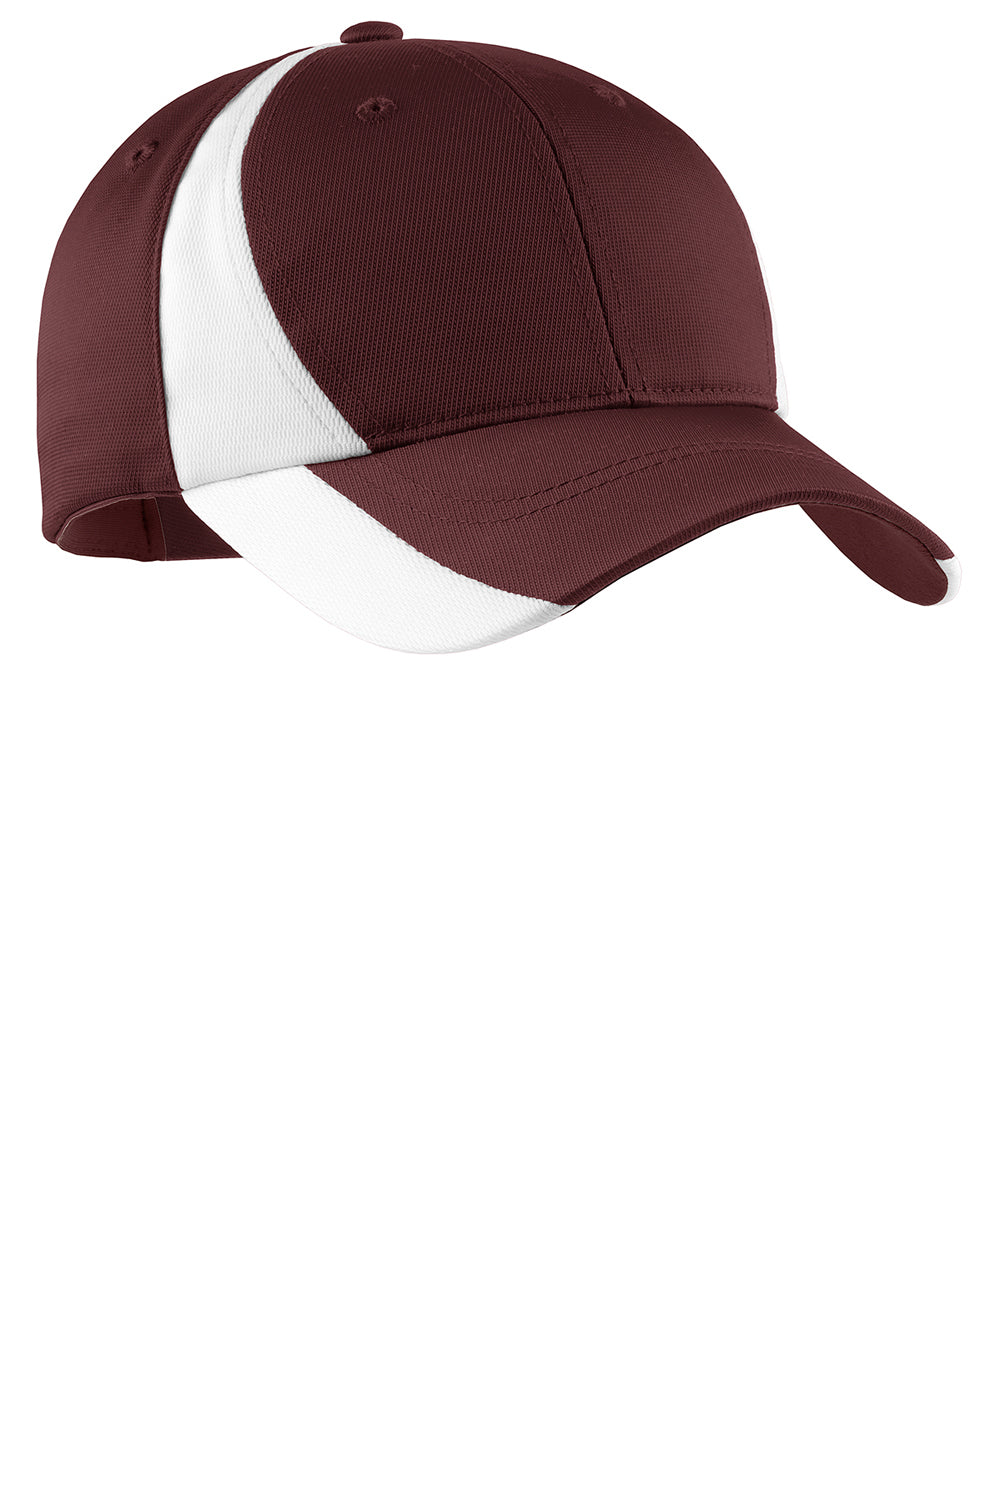 Sport-Tek YSTC11 Dry Zone Colorblock Hat Maroon/White Front